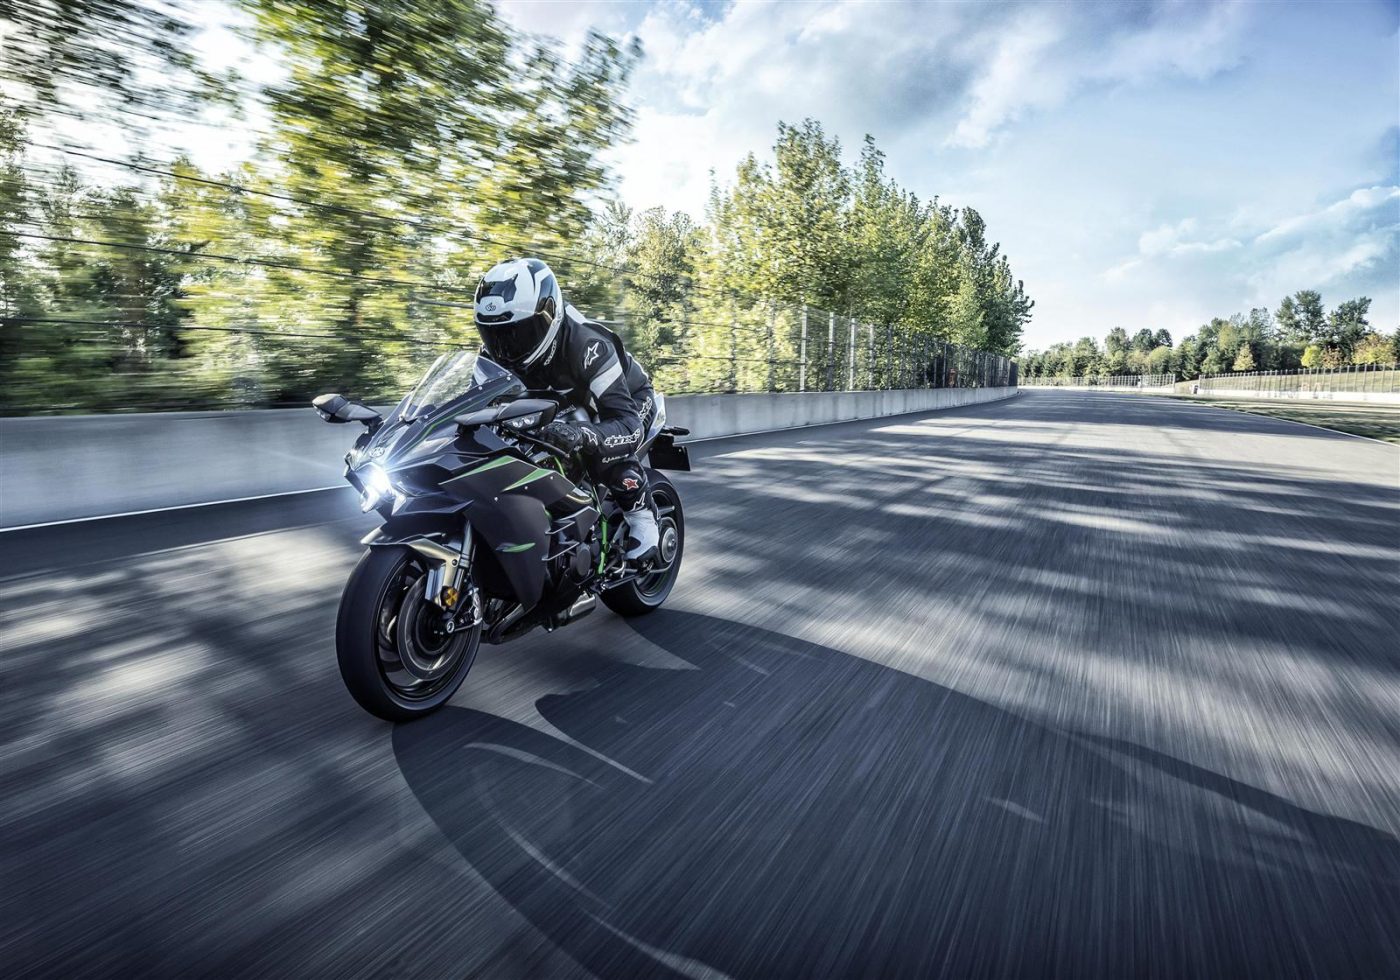 Supercharged Kawasaki Z series motorcycle teased ahead [Video]